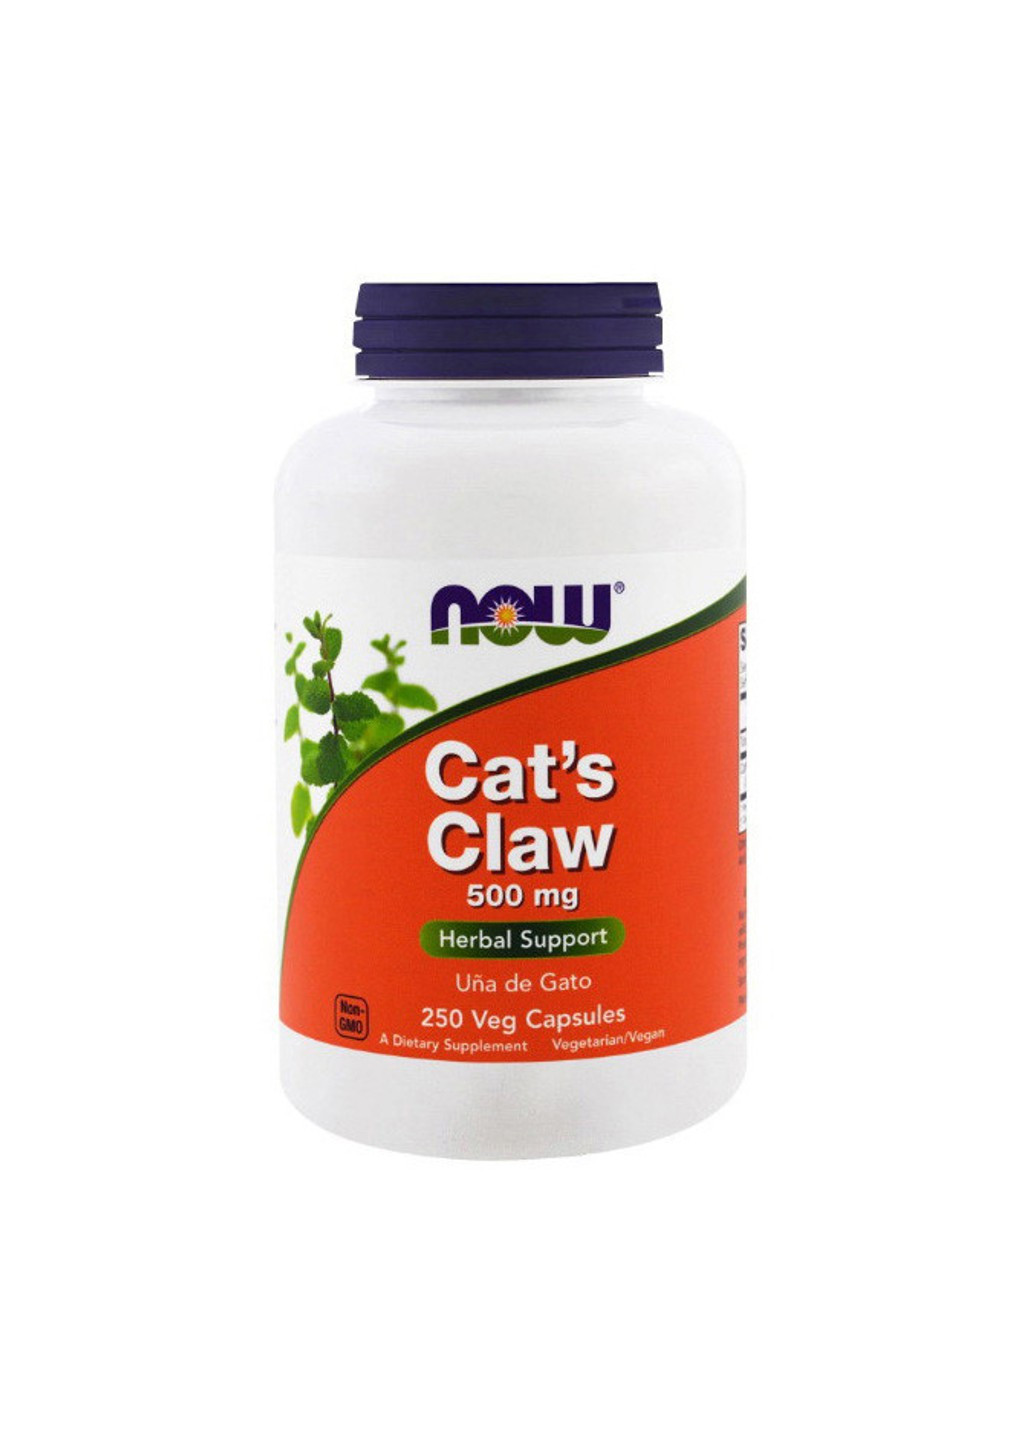 Кошачий коготь экстракт Cat`s Claw 500 mg (250 капс) нау фудс Now Foods (255408510)